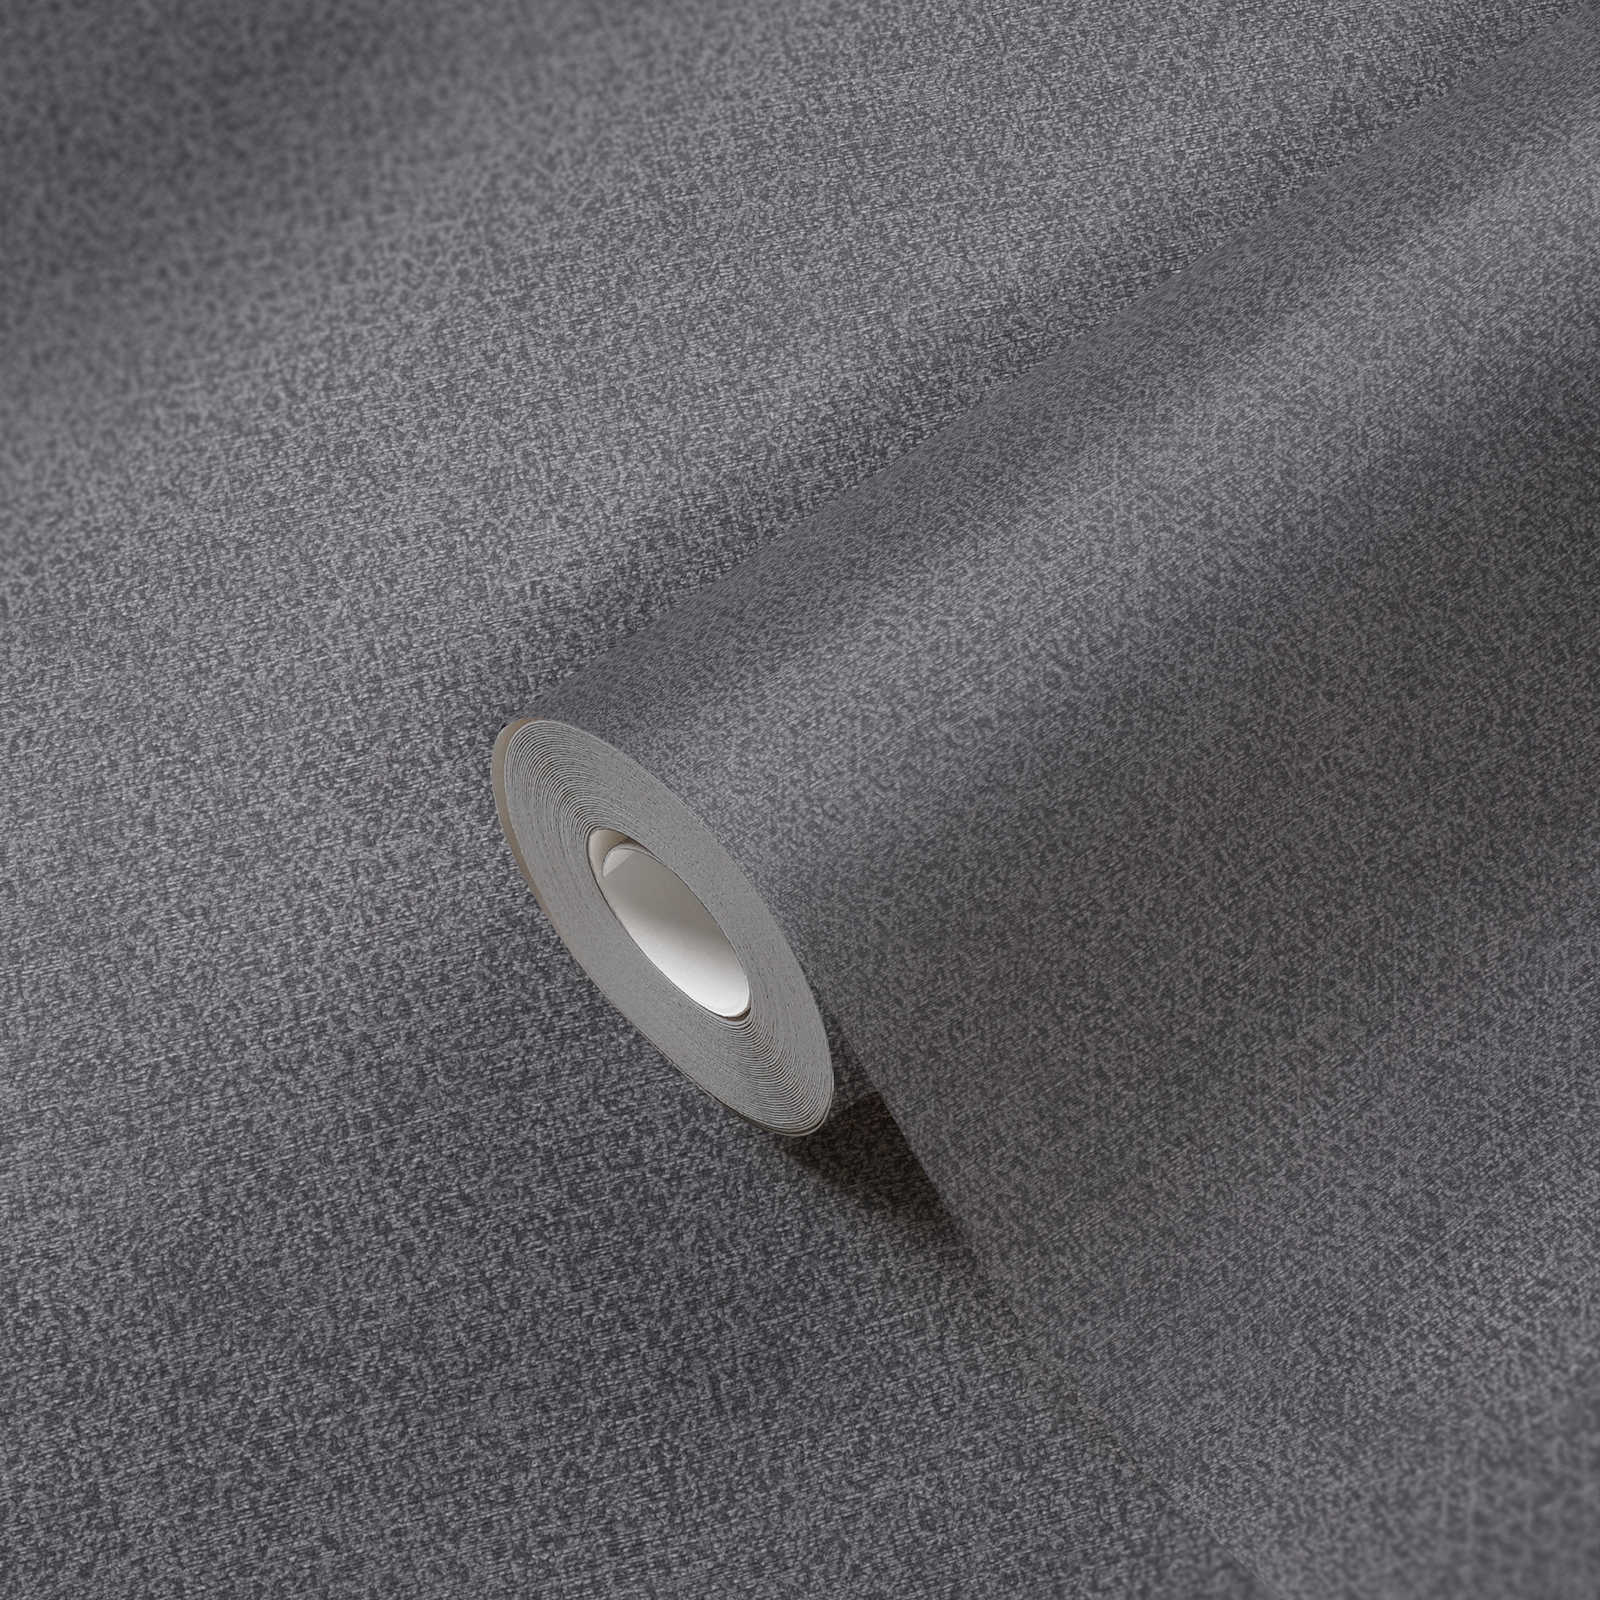             Non-woven wallpaper PVC-free with gloss pattern - black, silver
        